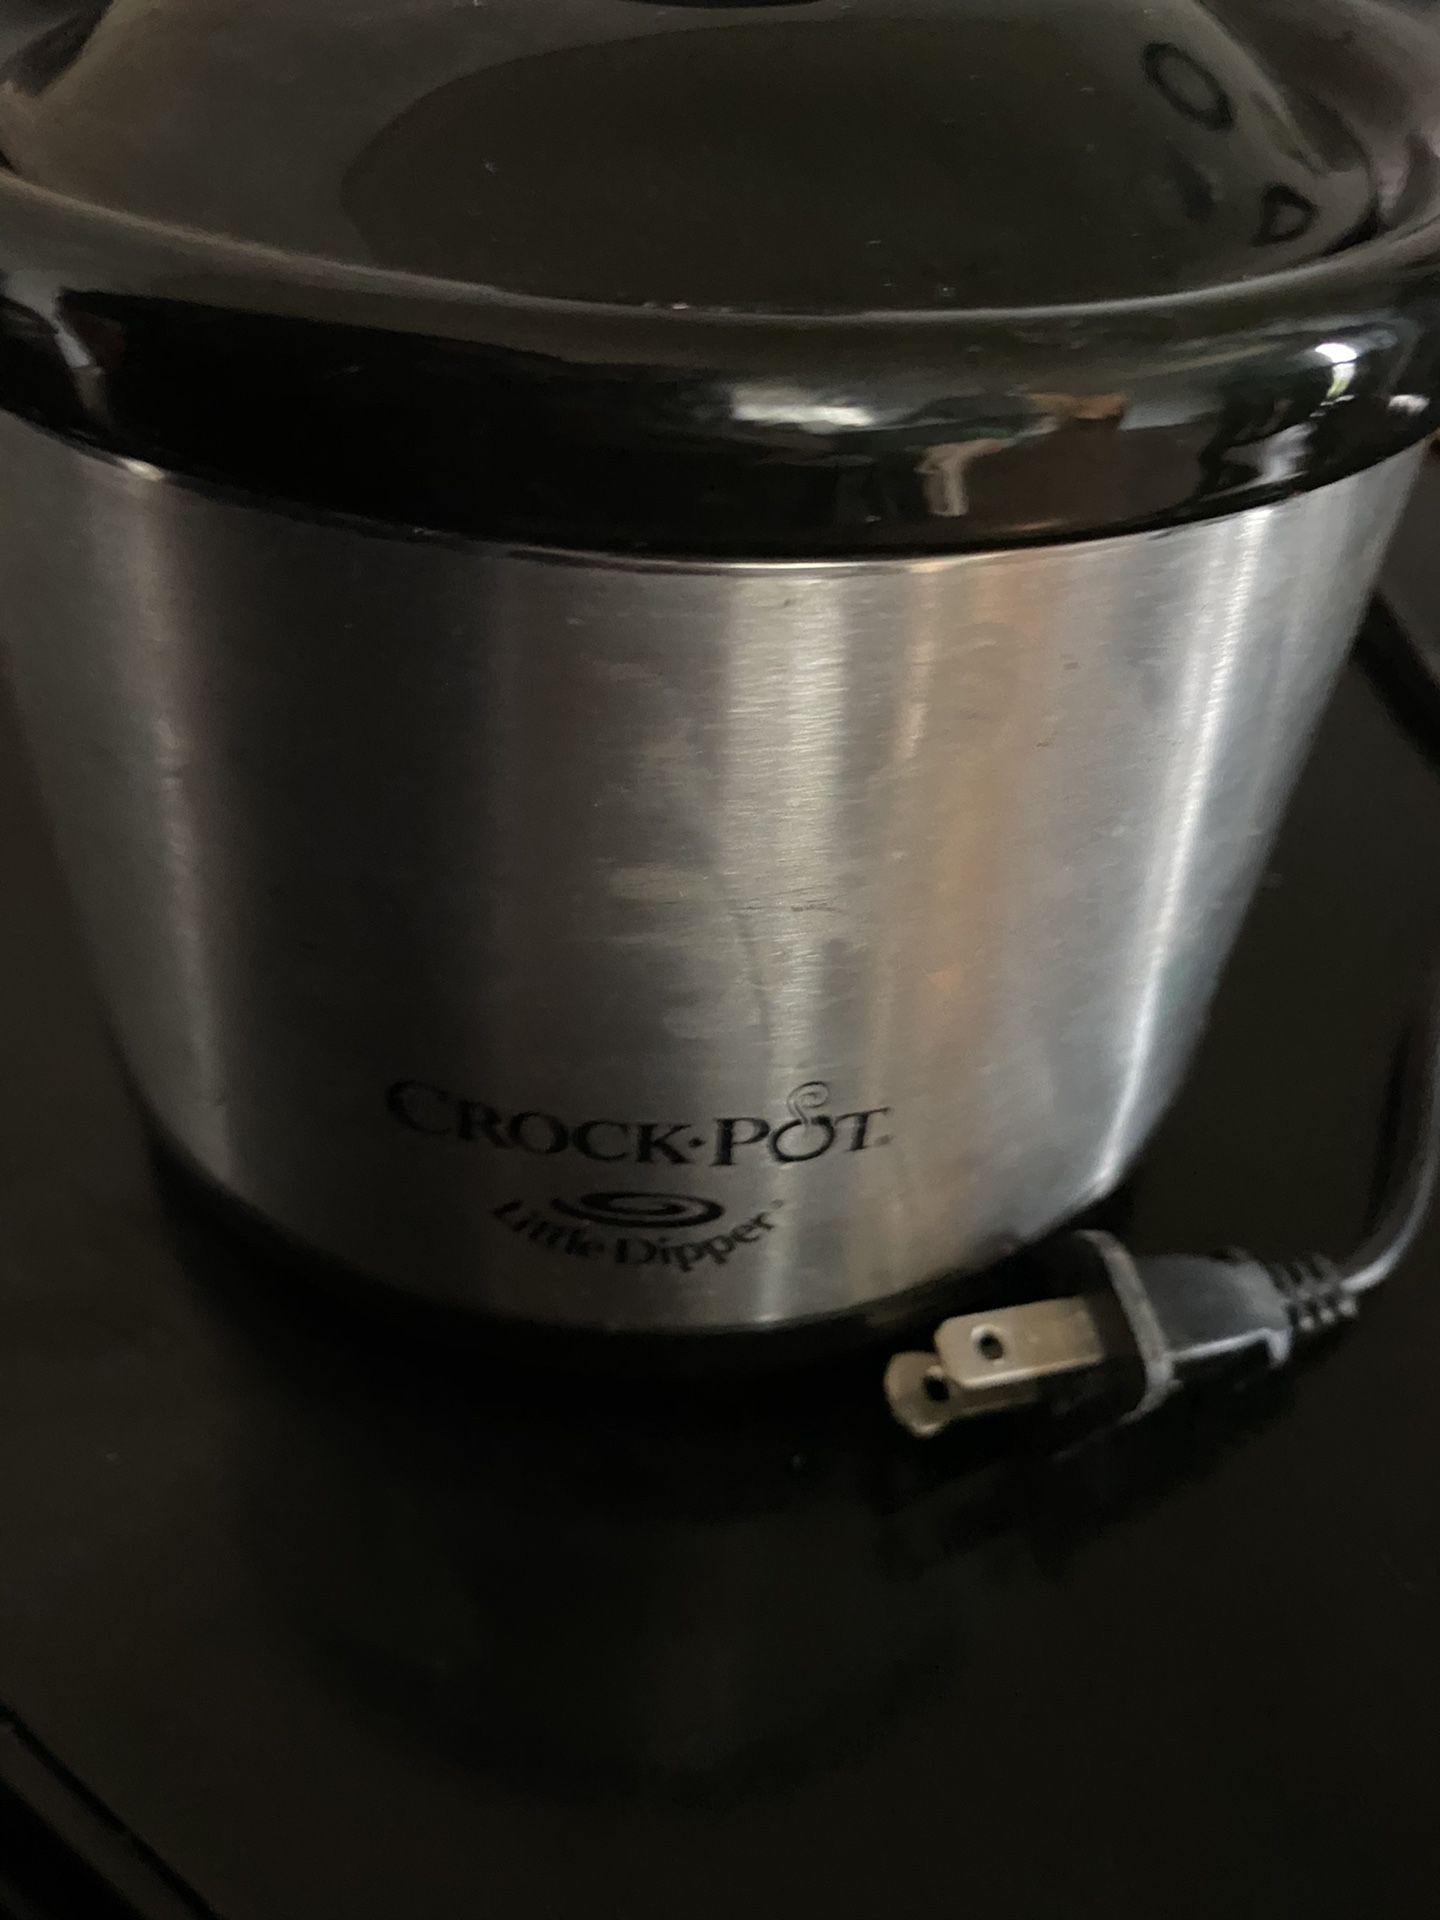 Tiny crock pot